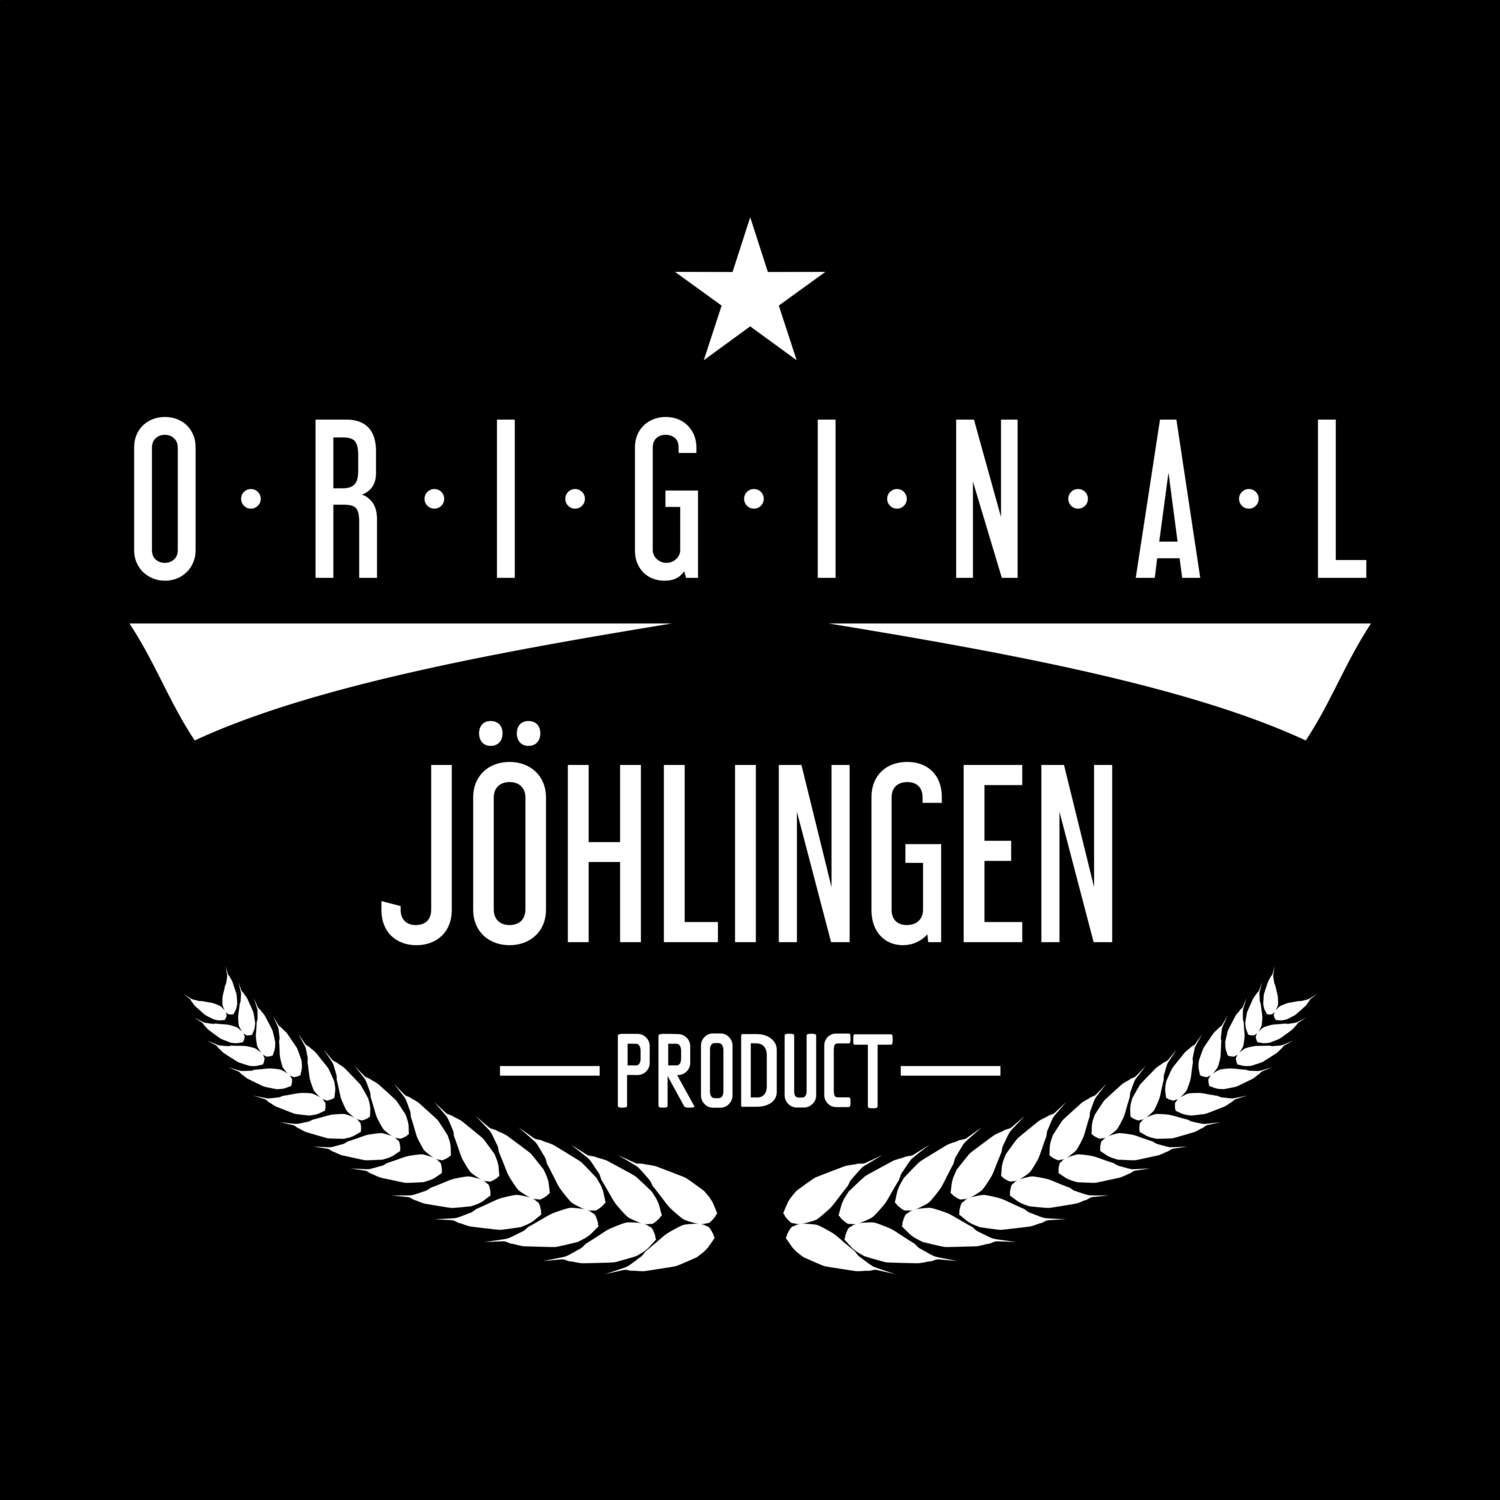 Jöhlingen T-Shirt »Original Product«